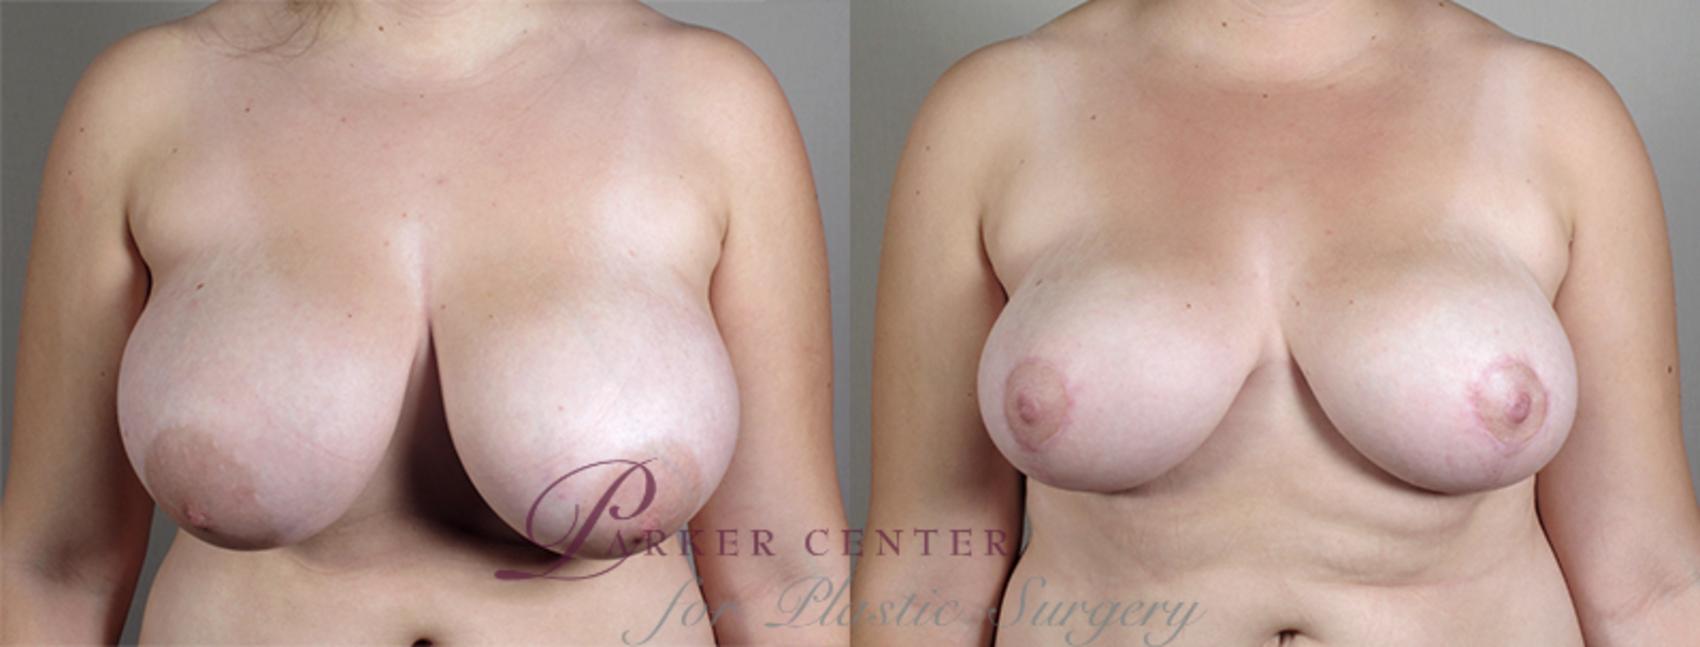 Breast Lift Case 514 Before & After View #1 | Paramus, NJ | Parker Center for Plastic Surgery